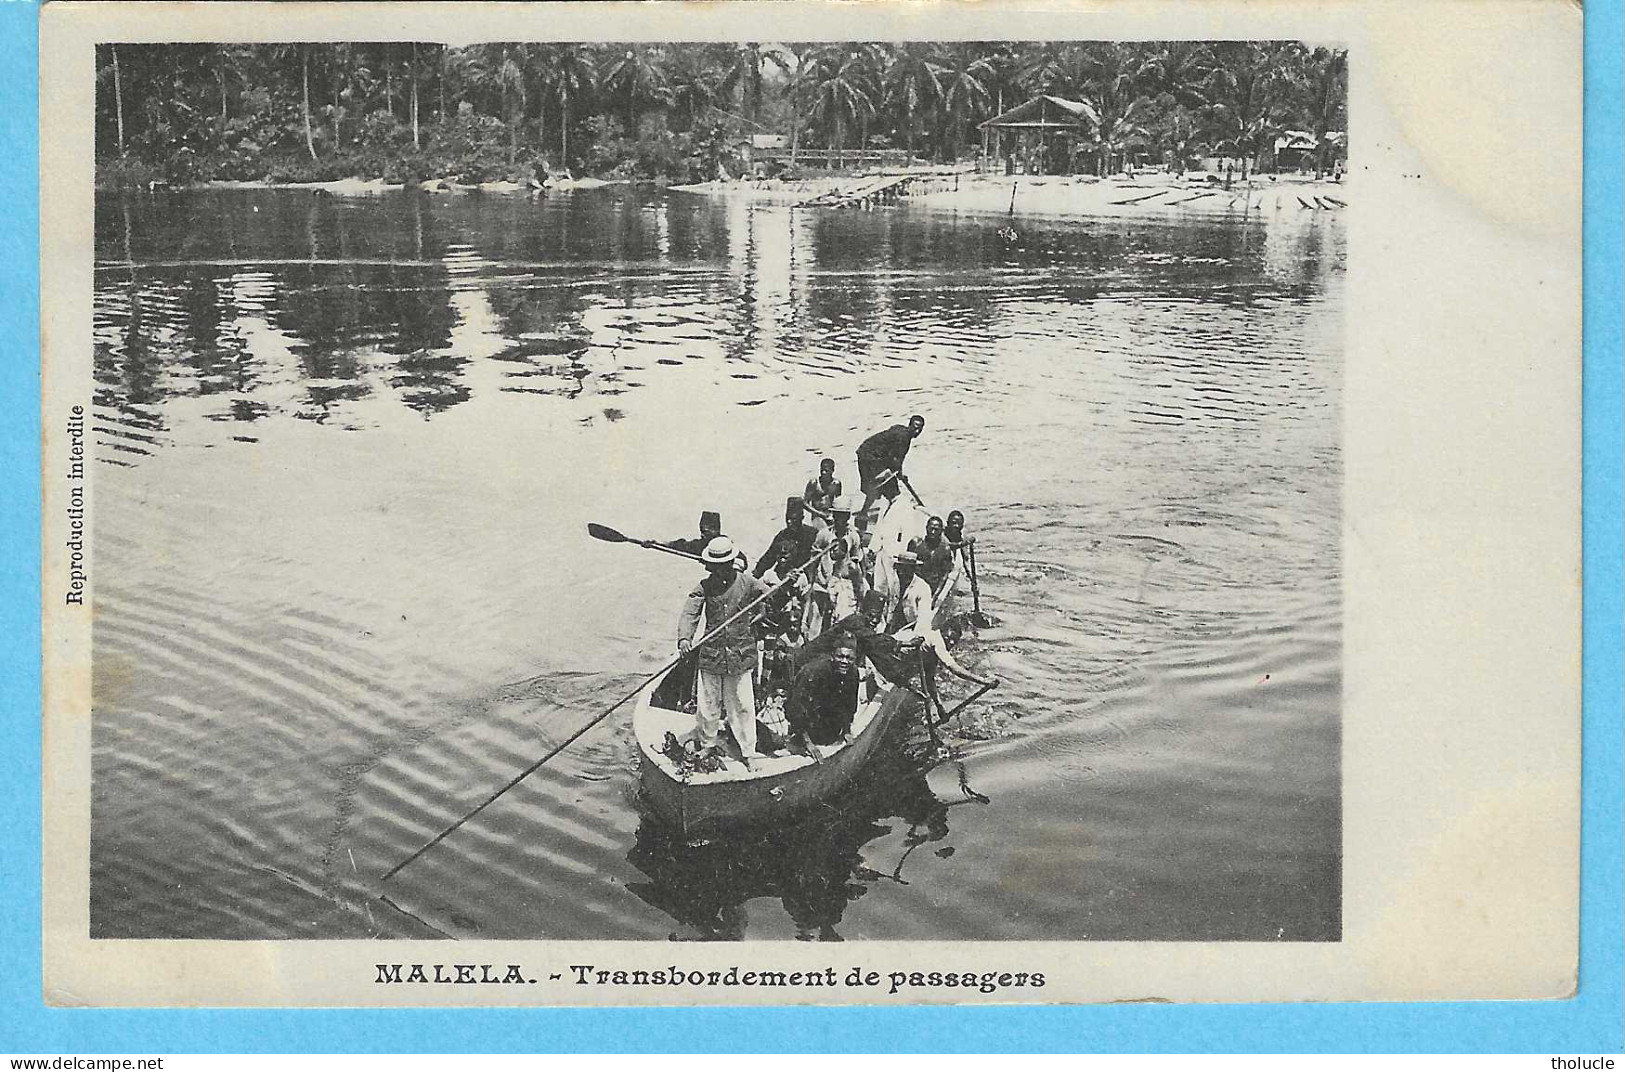 Timbre Type Mols-Congo Belge Unilingue-1909 10c Carmin-N°51-Cachet "Boma-1910"-Malela-Transbordement De Passagers-Barque - Briefe U. Dokumente